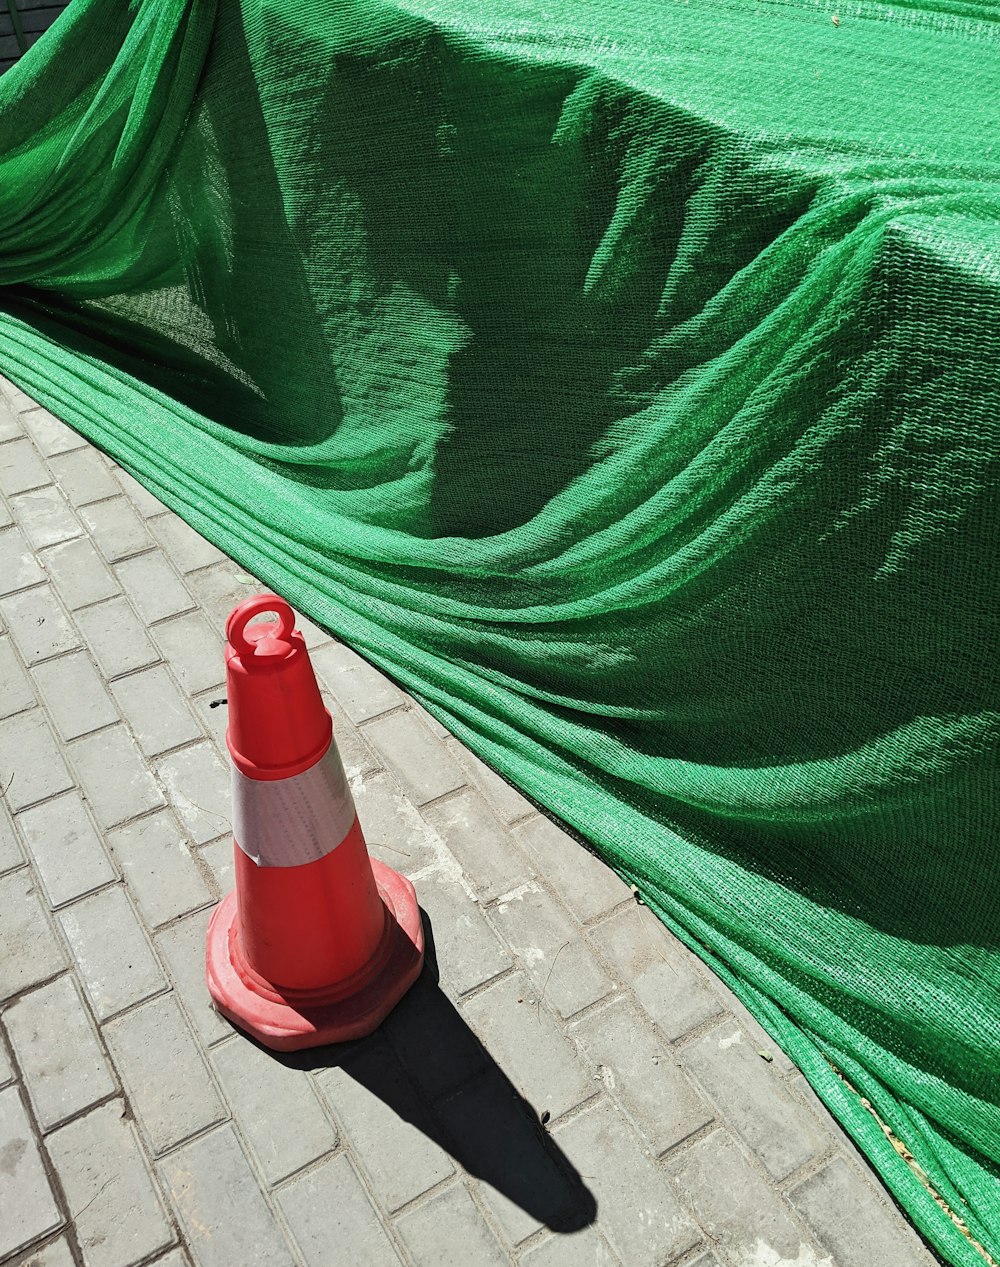 a green tarp covering a fire hydrant on a sidewalk